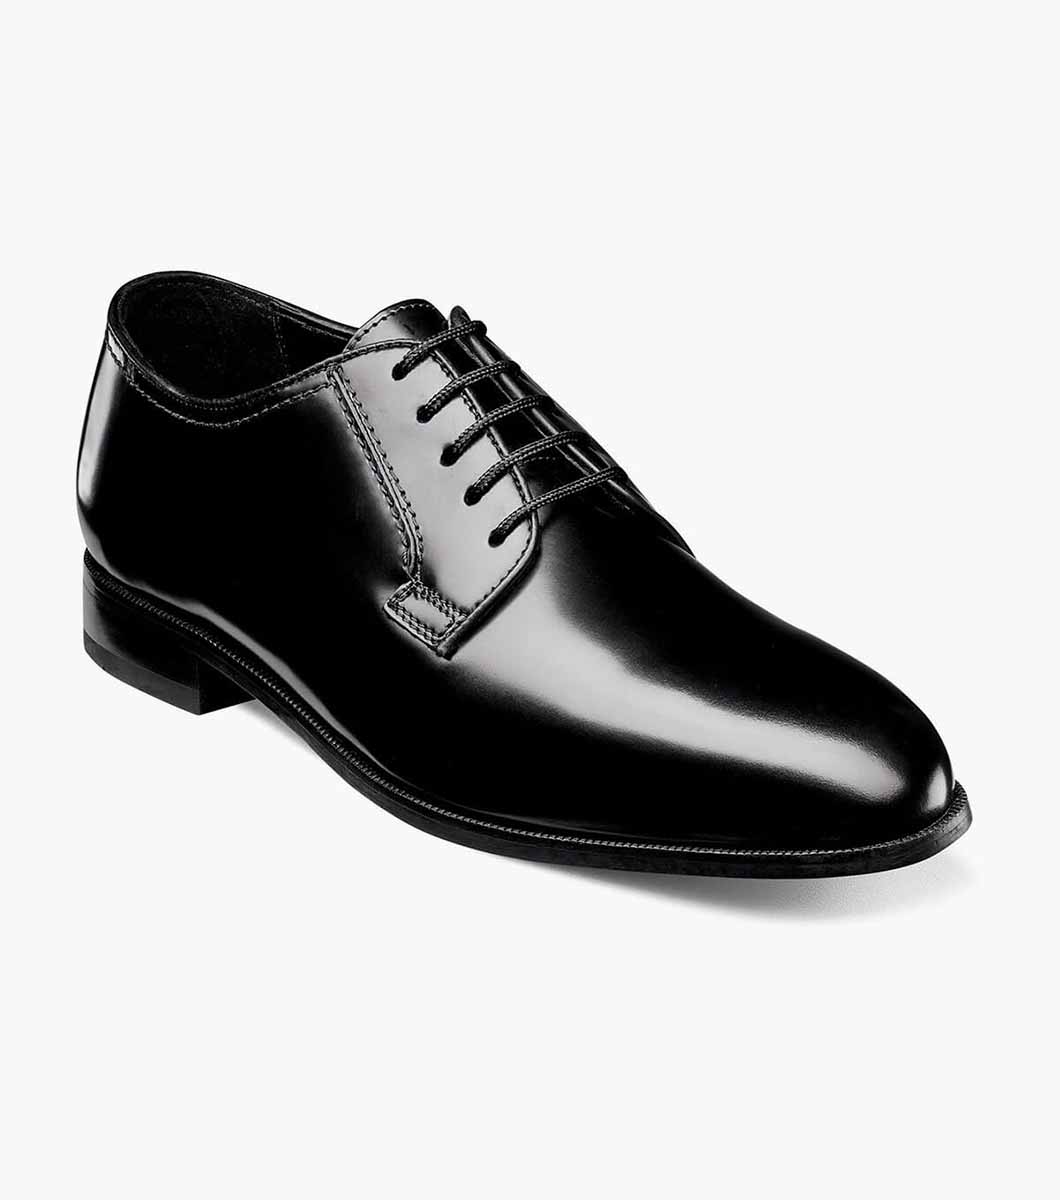 Official shoes men's love wedding dress shoes patent leather oxford shoes 